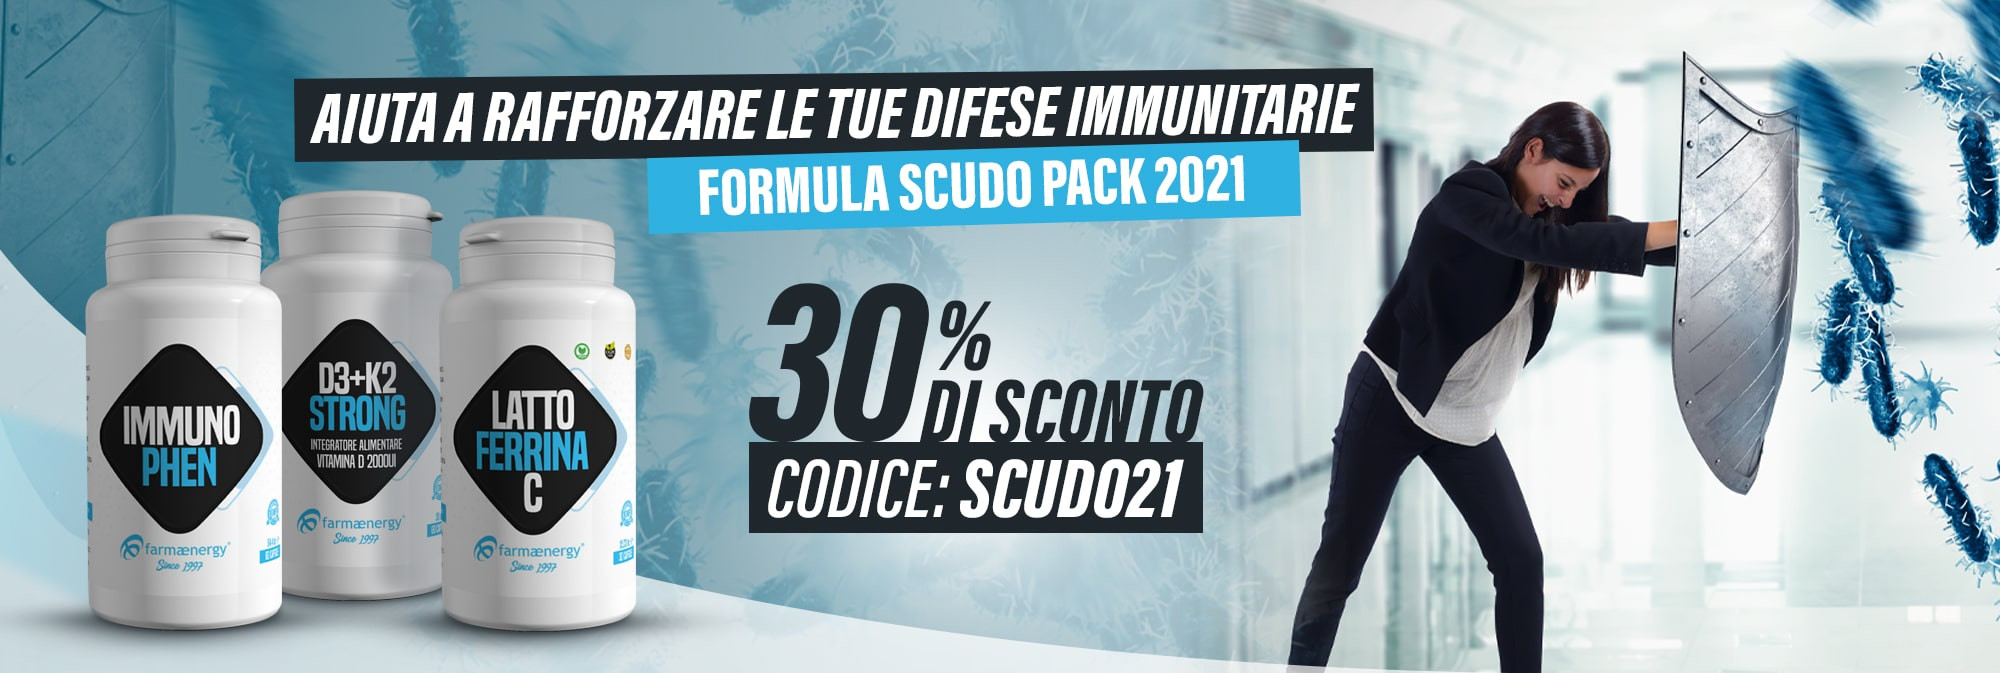 Promo Difese Immunitarie 30% Sconto